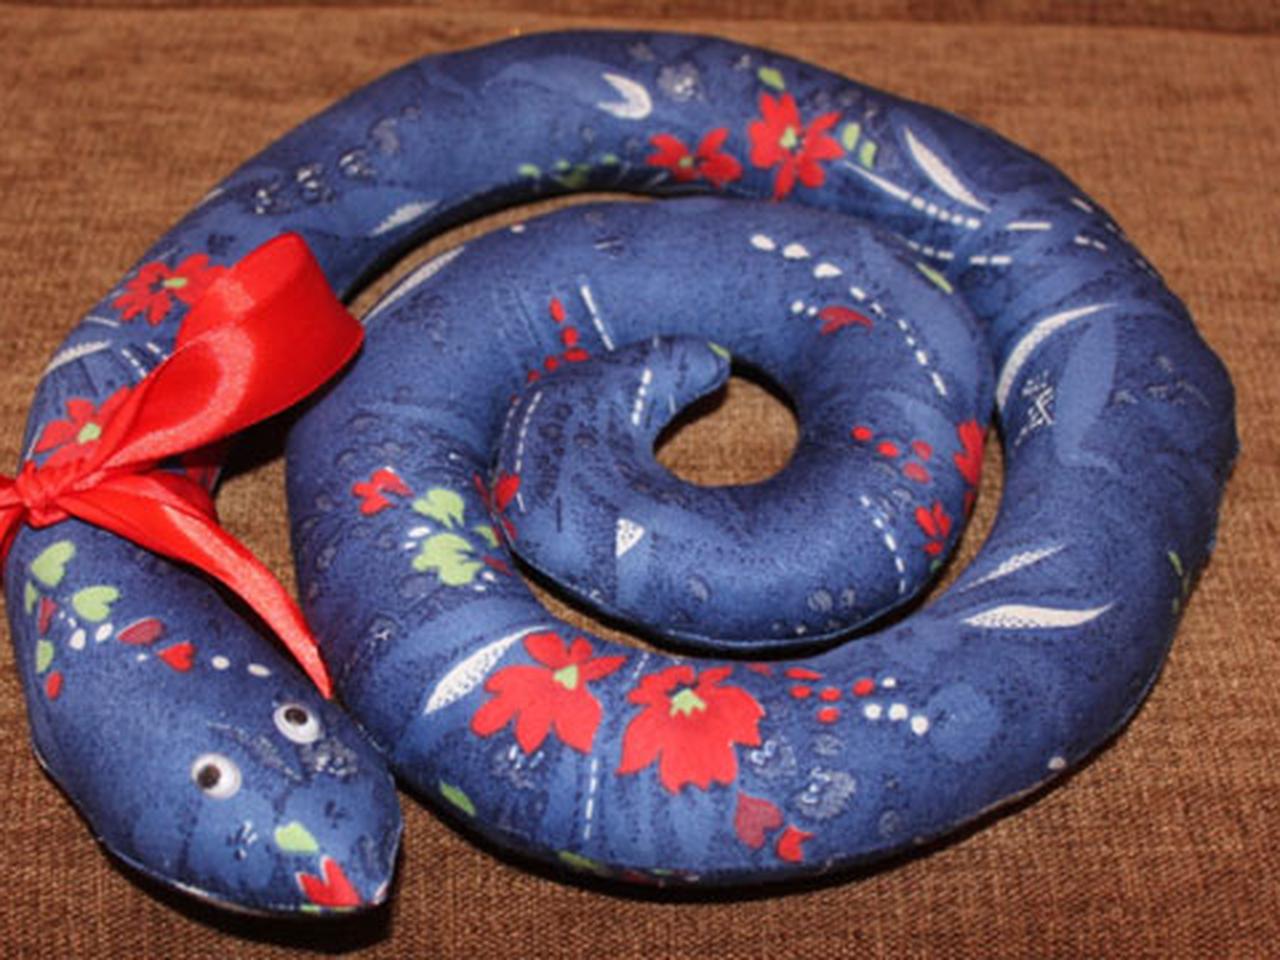 Кольцо в виде змеи как символ мудрости и чести